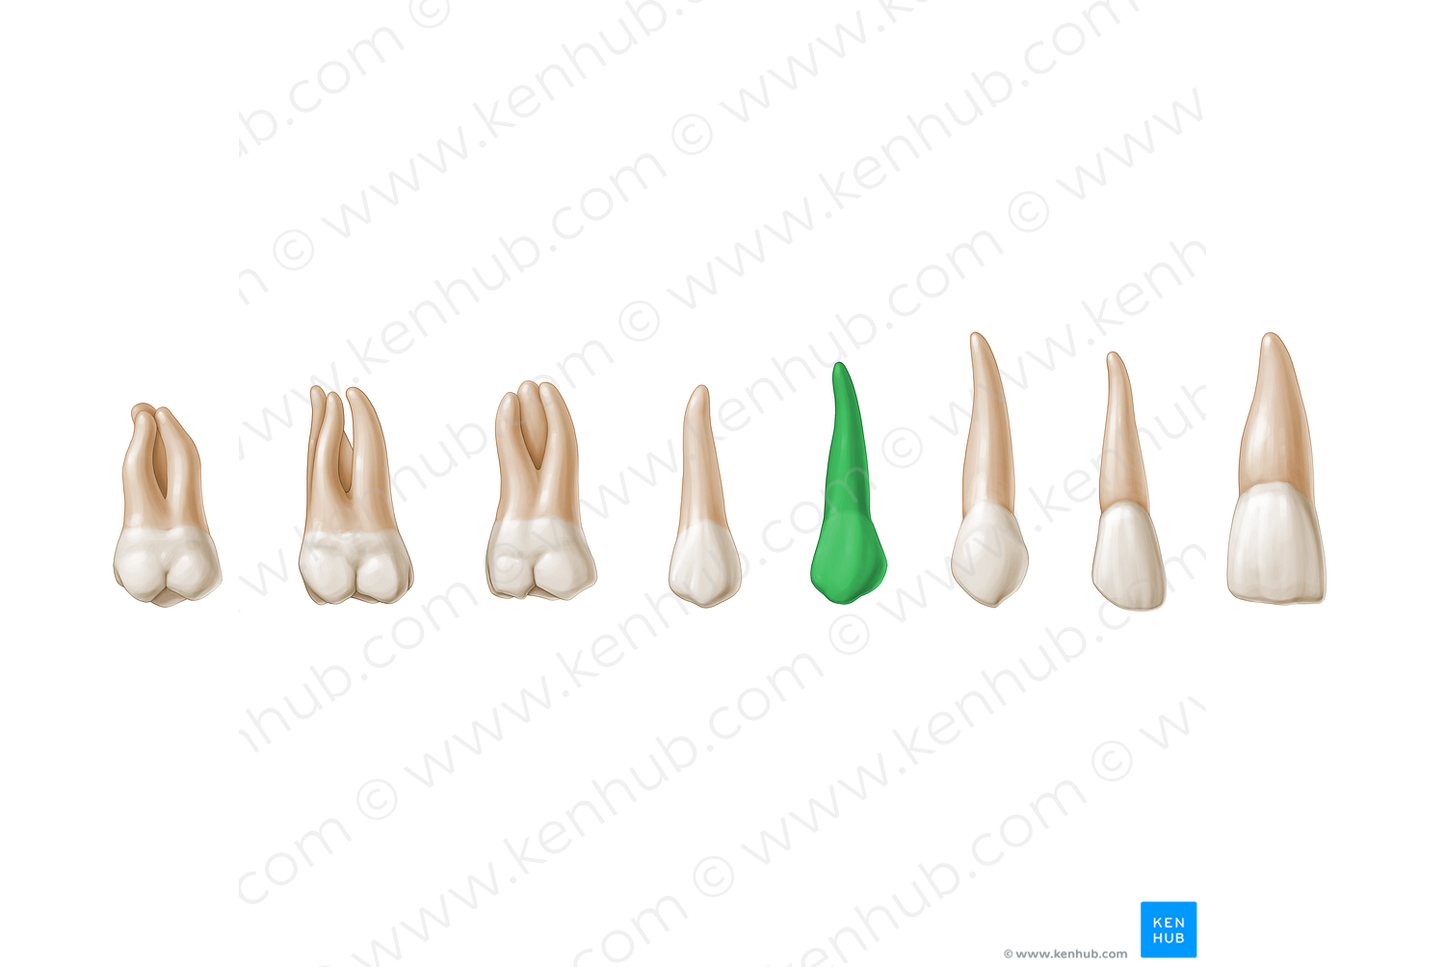 1st premolar tooth (#3230)